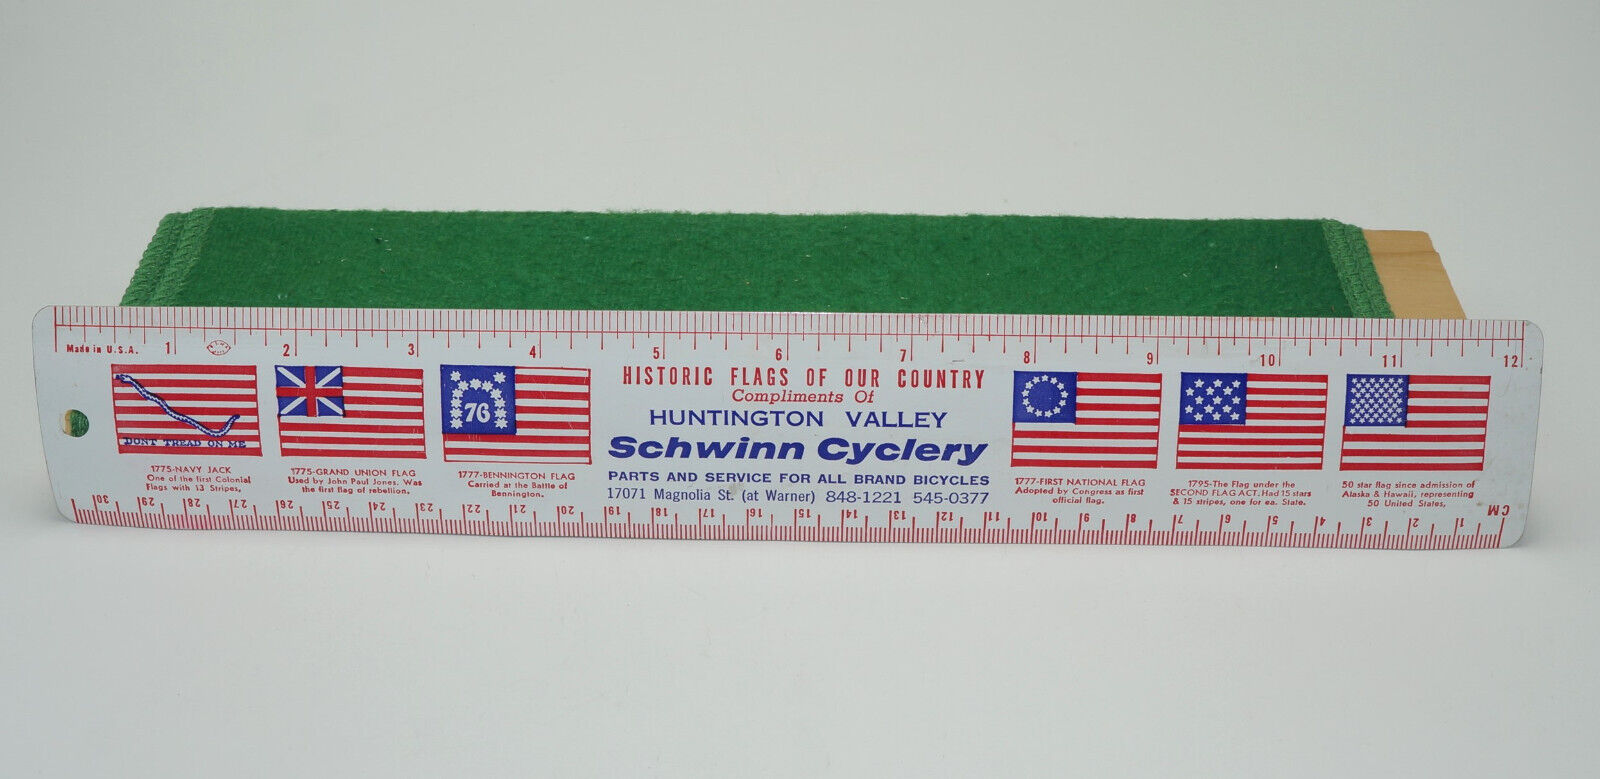 Vintage Huntington Valley Schwinn Cyclery Historic Flags Metal Ruler - Rare